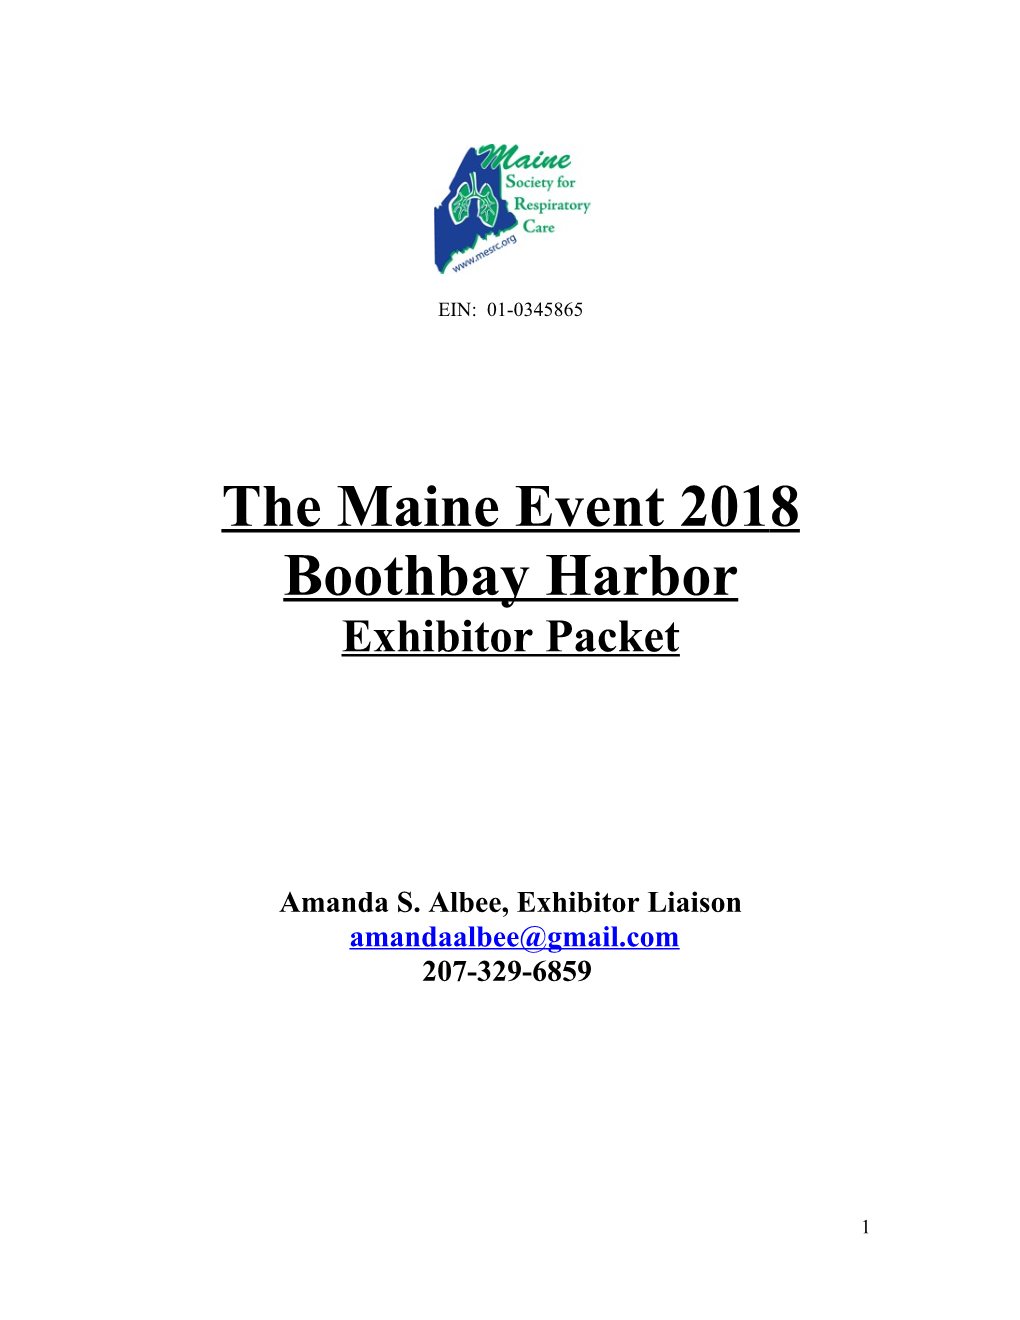 The Maine Event 2018 Boothbay Harbor Exhibitor Packet Amanda S. Albee, Exhibitor Liaison